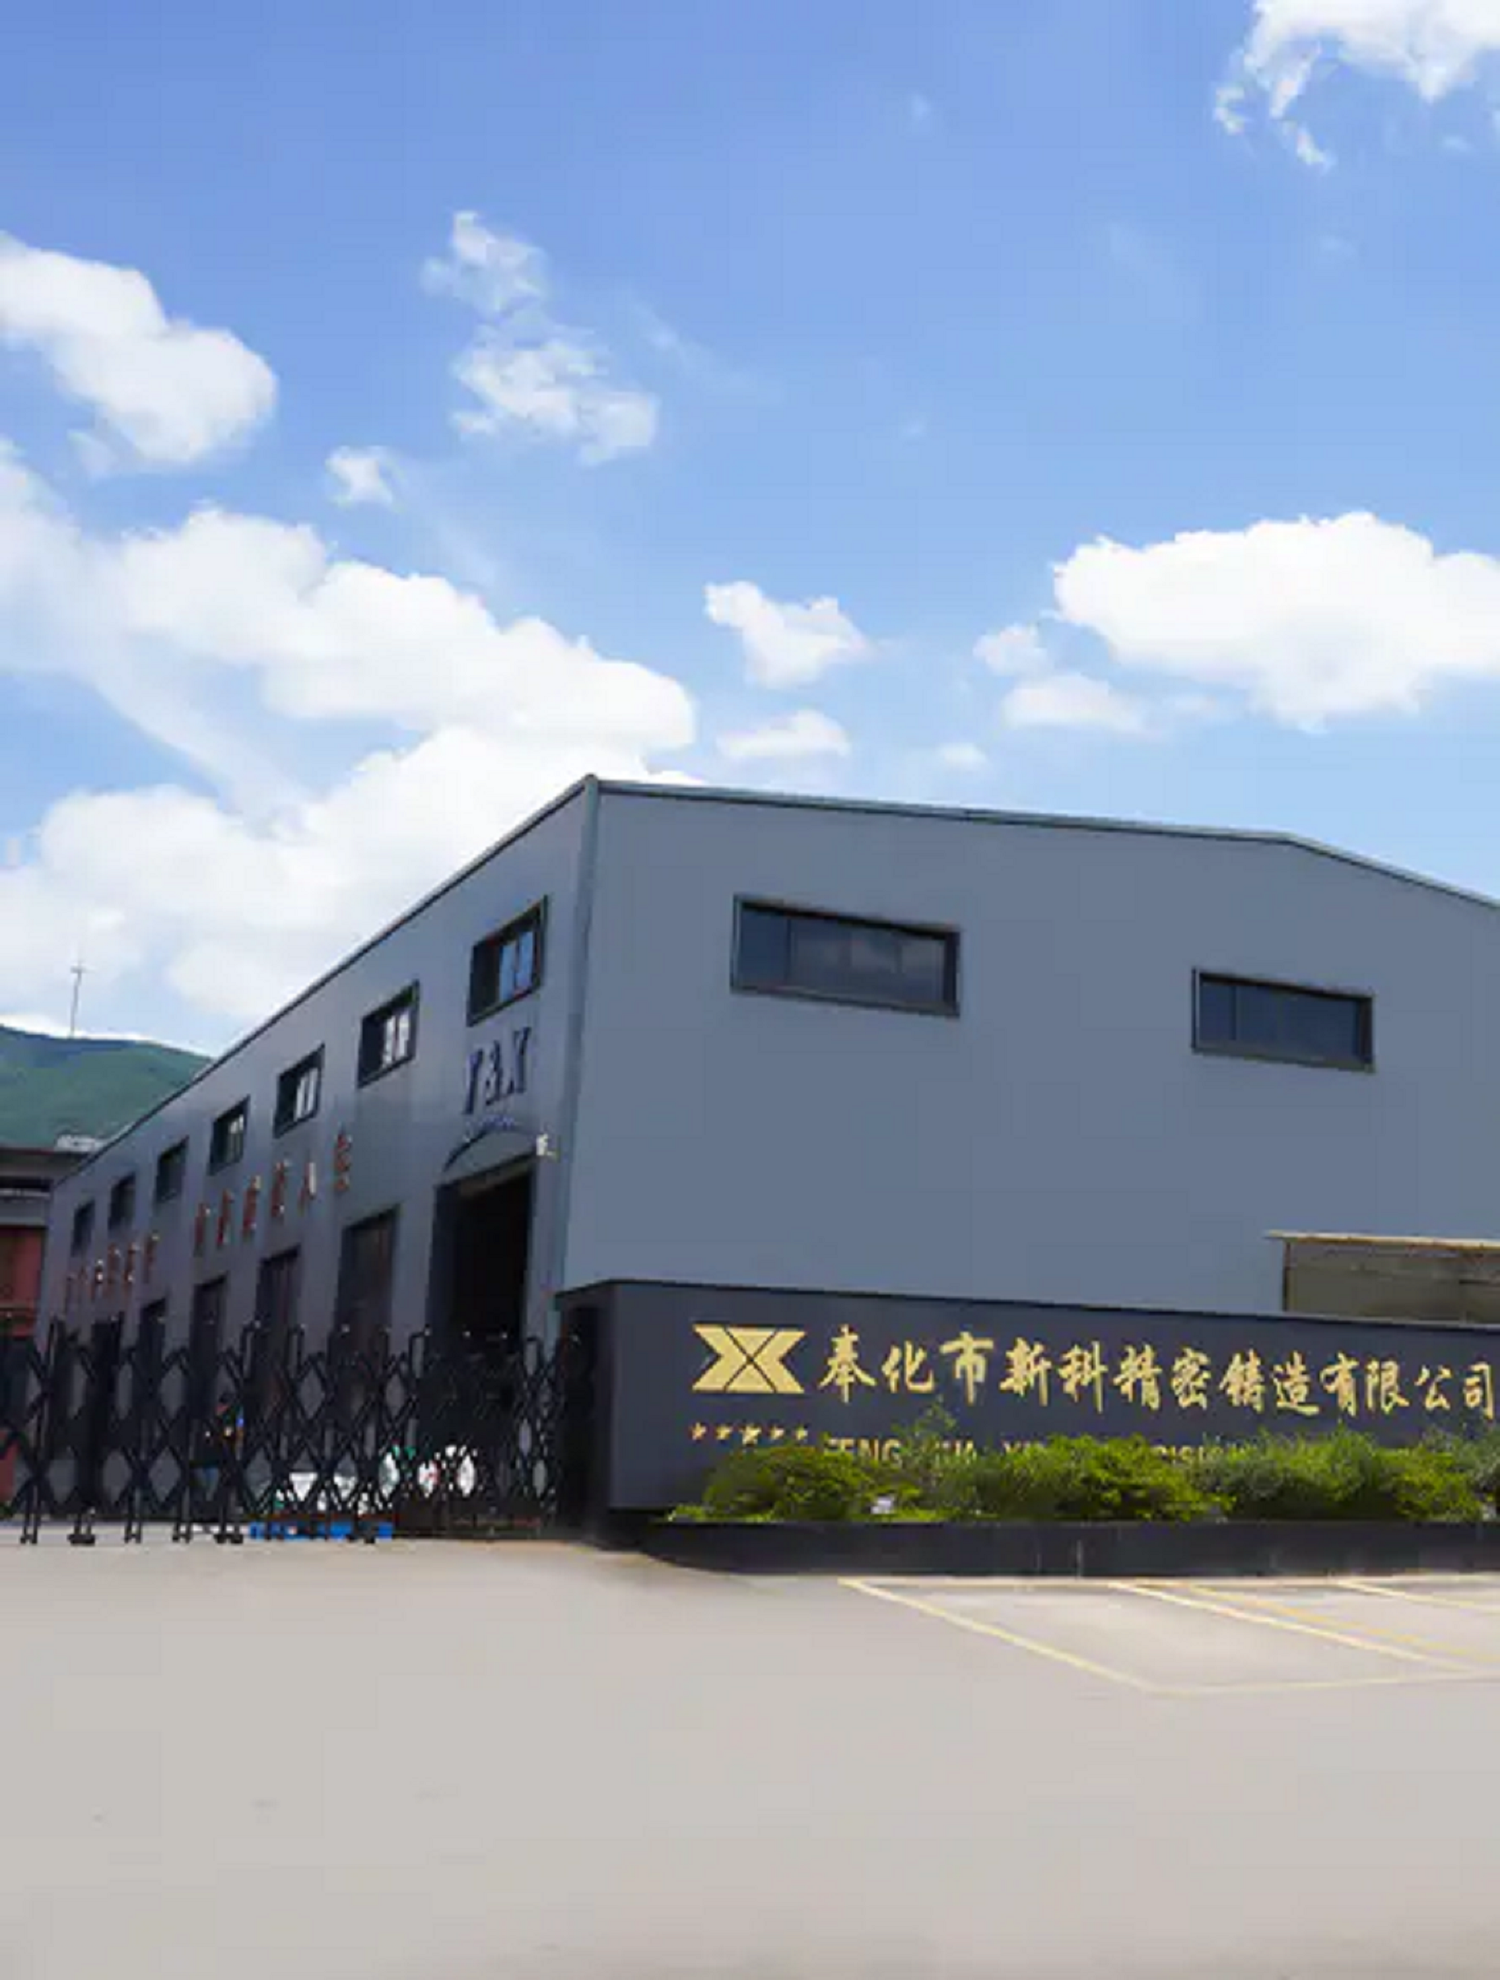 High Quality Fenghua Xinke Precision Casting Co., Ltd. Blank Meme Template